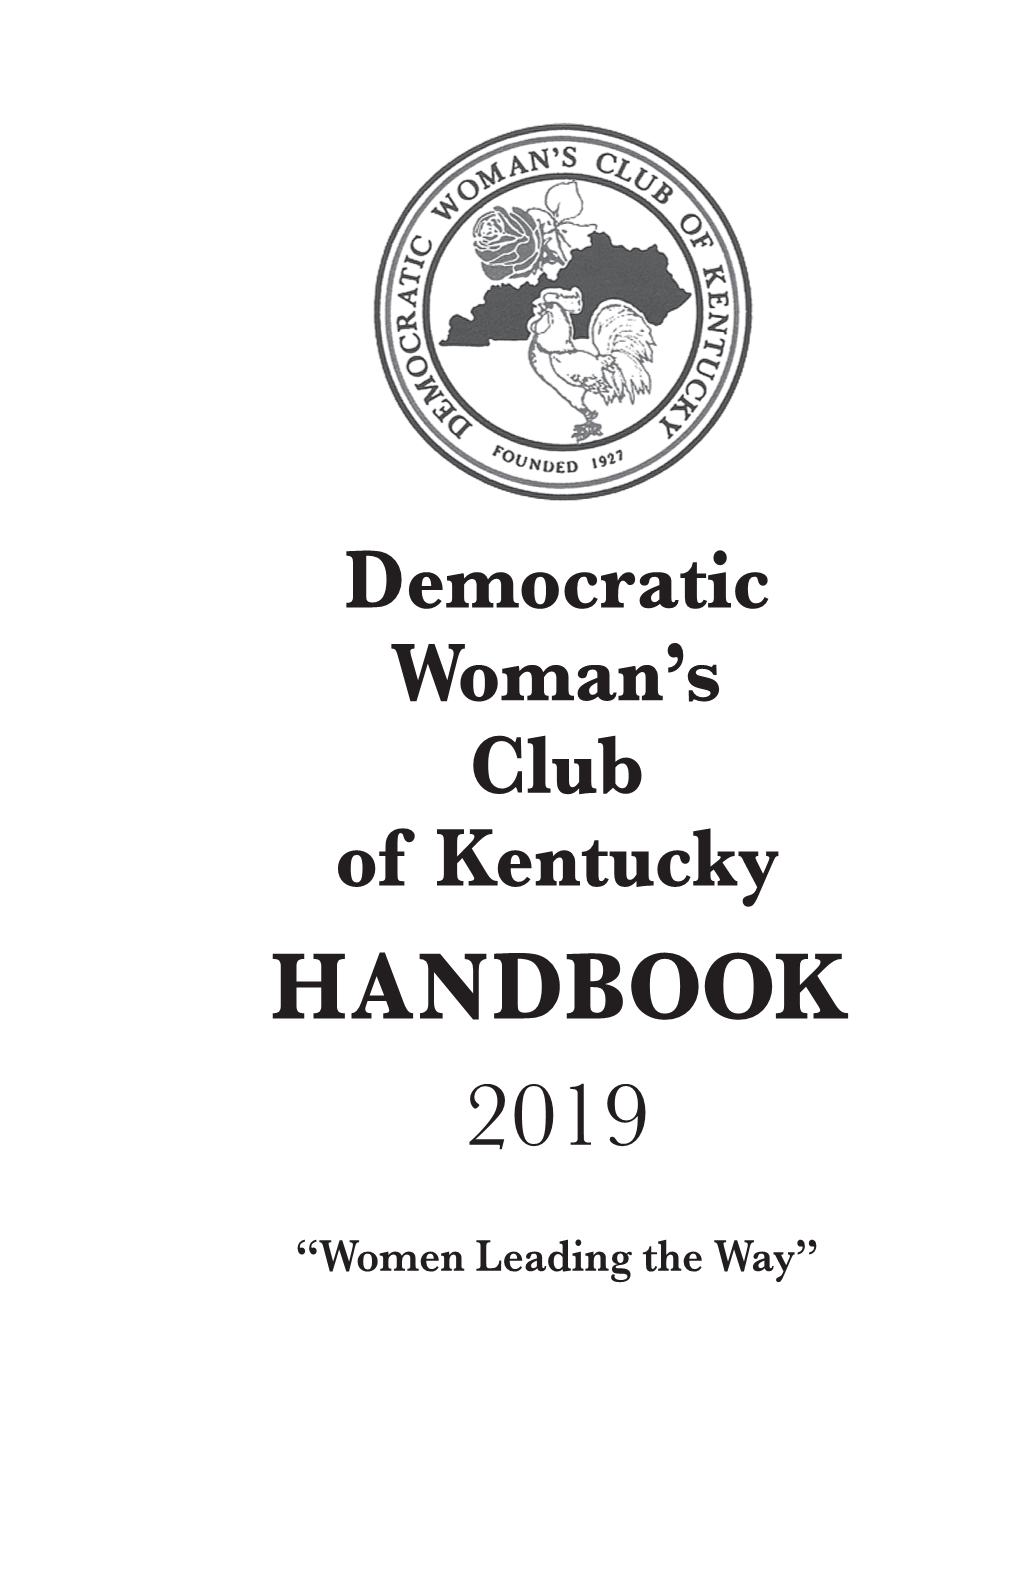 Handbook 2019